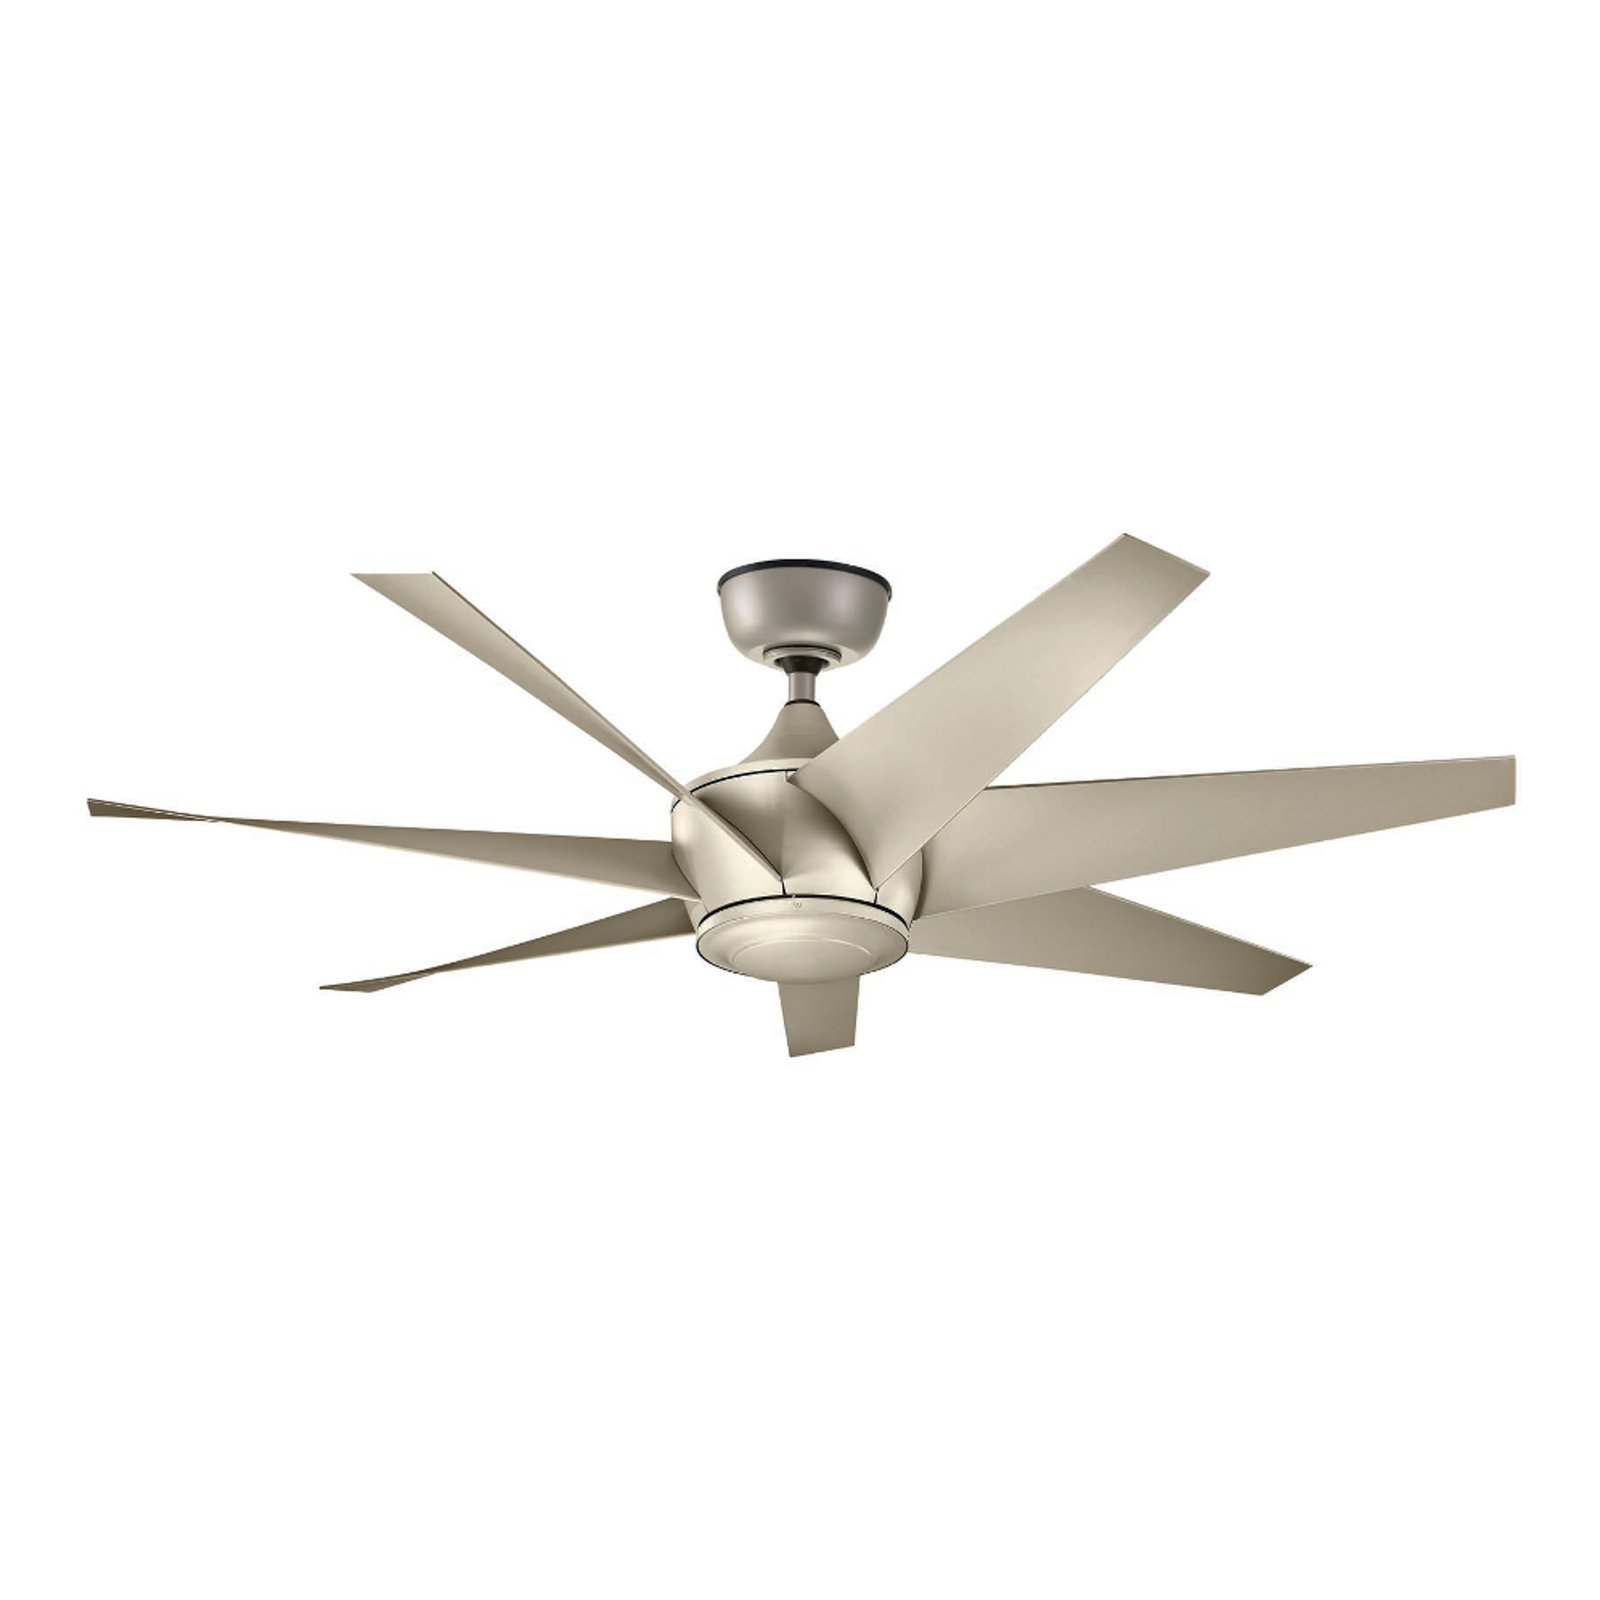 Lehr2 ceiling fan, IP44, silver antique, Ø 137 cm